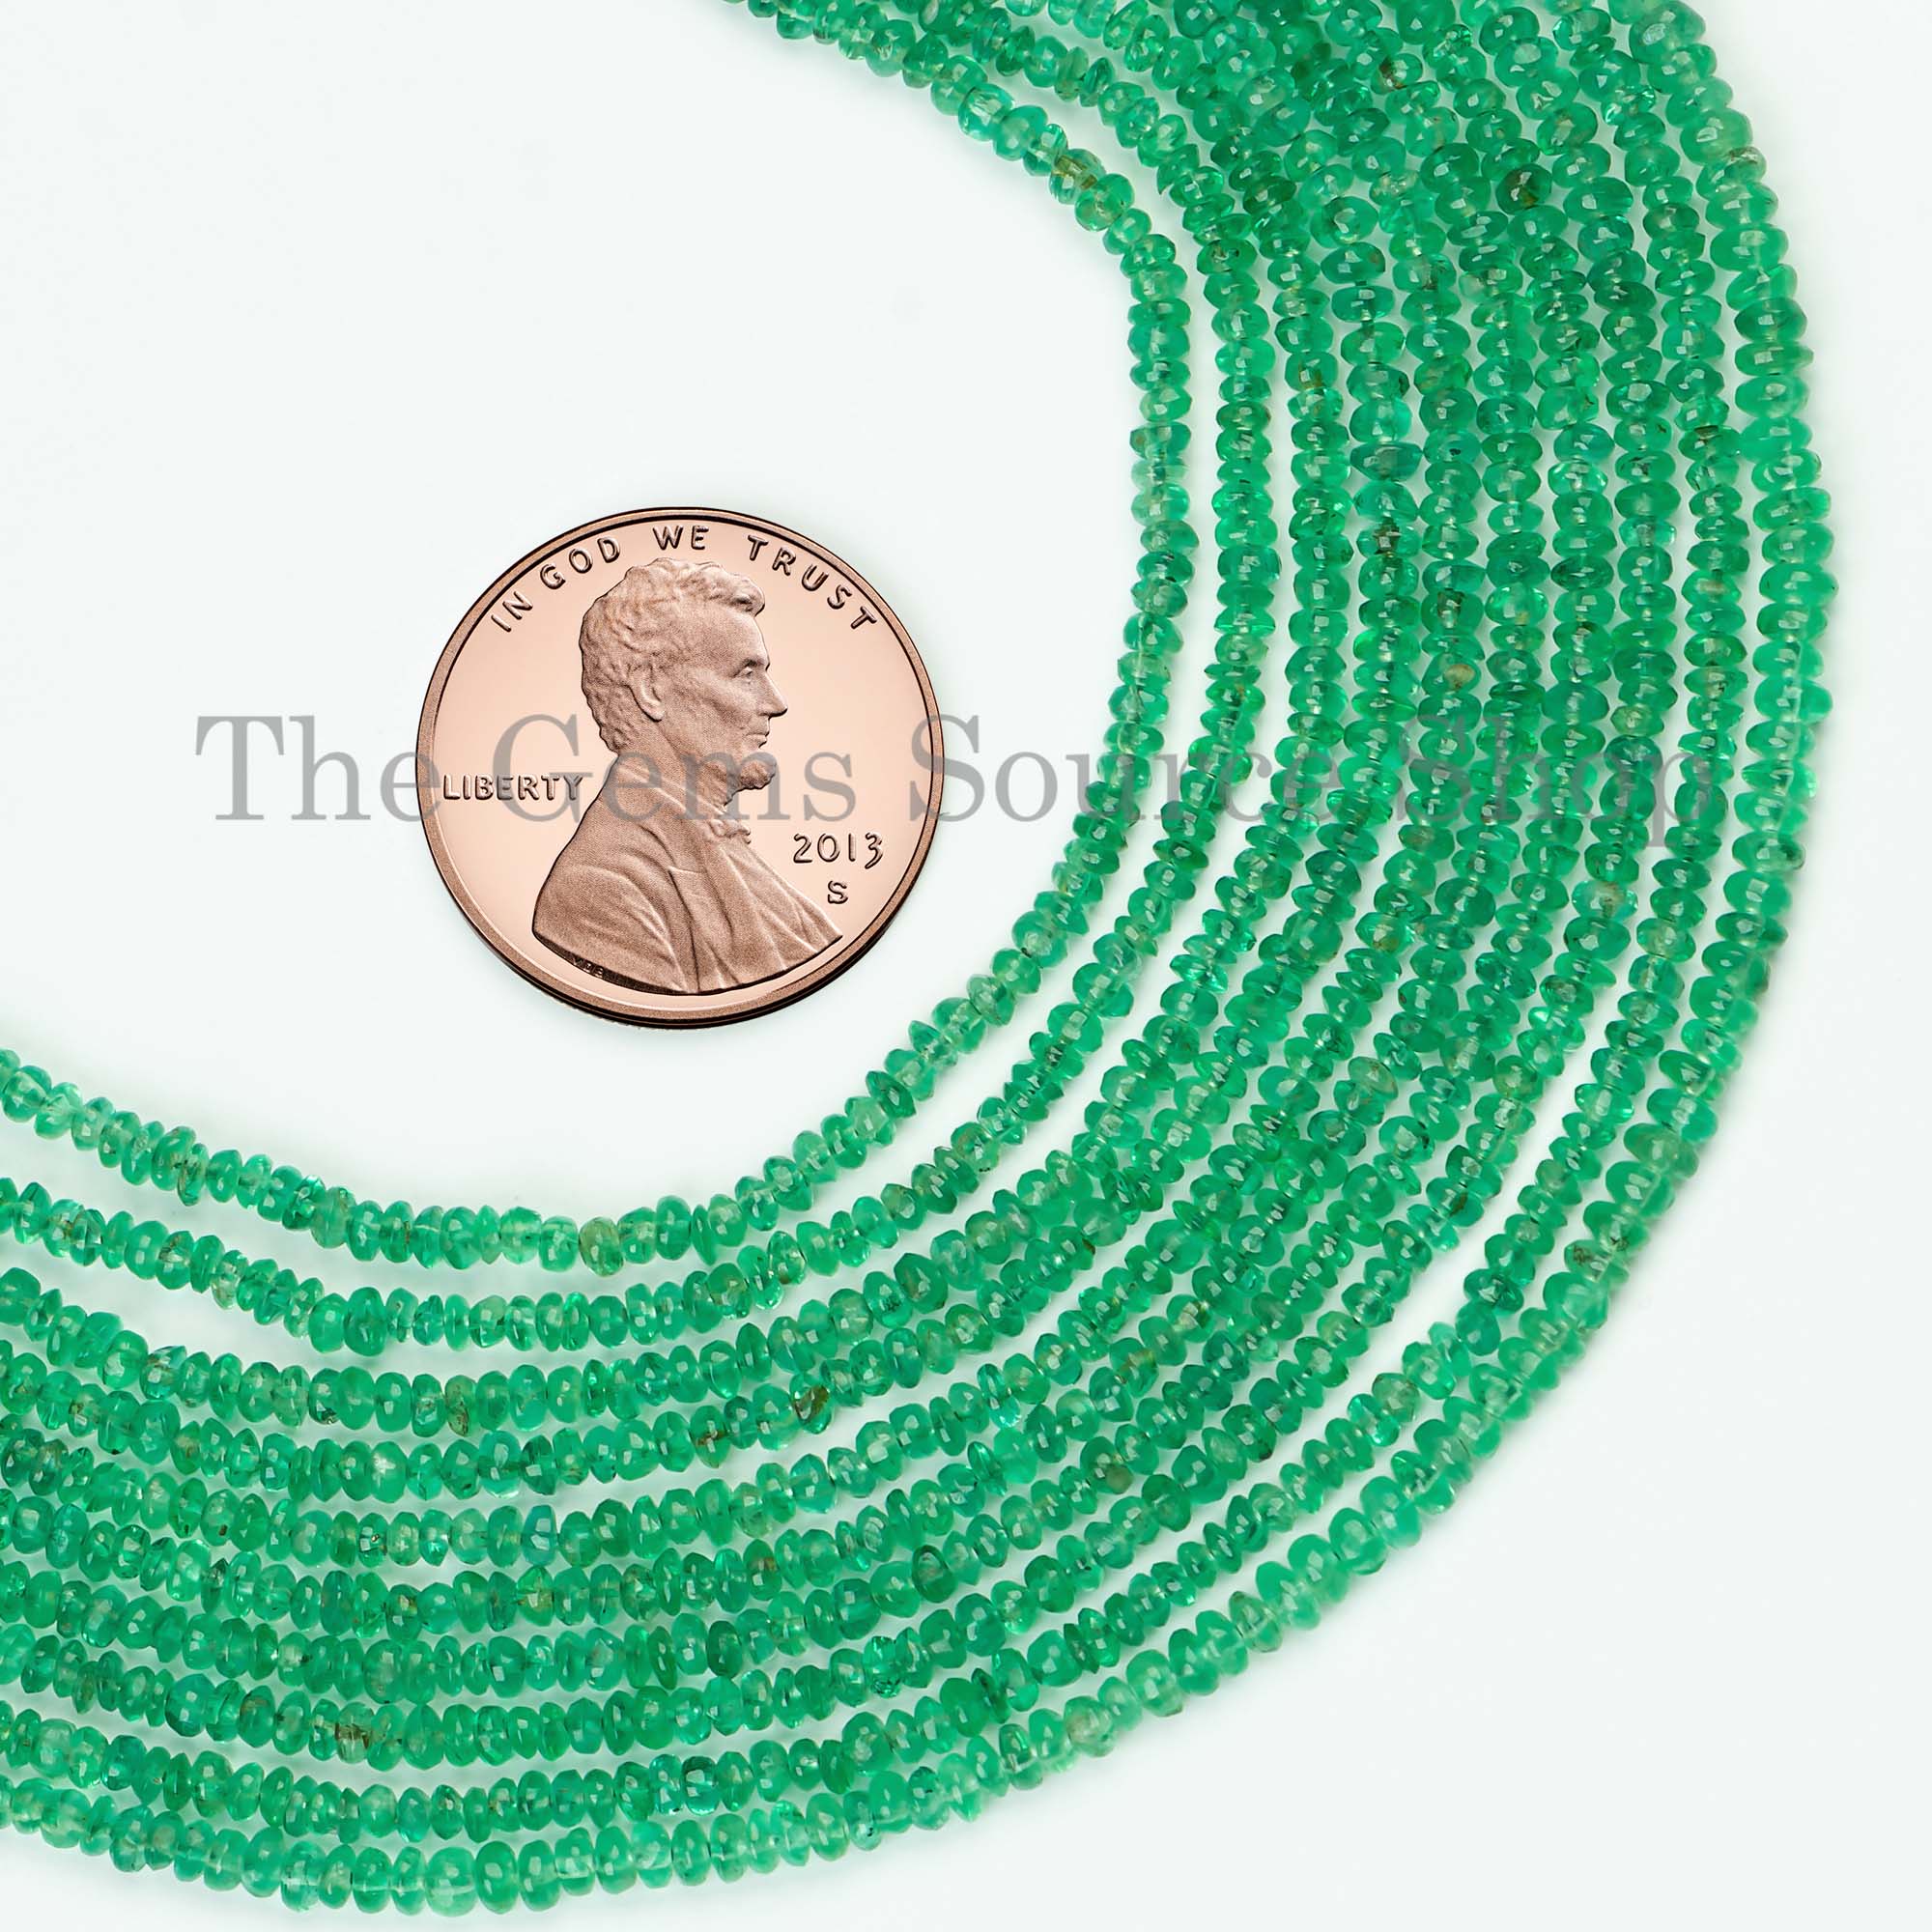 Emerald Smooth Beads, Emerald Rondelle Shape Beads, Plain Emerald Beads, Gemstone Beads